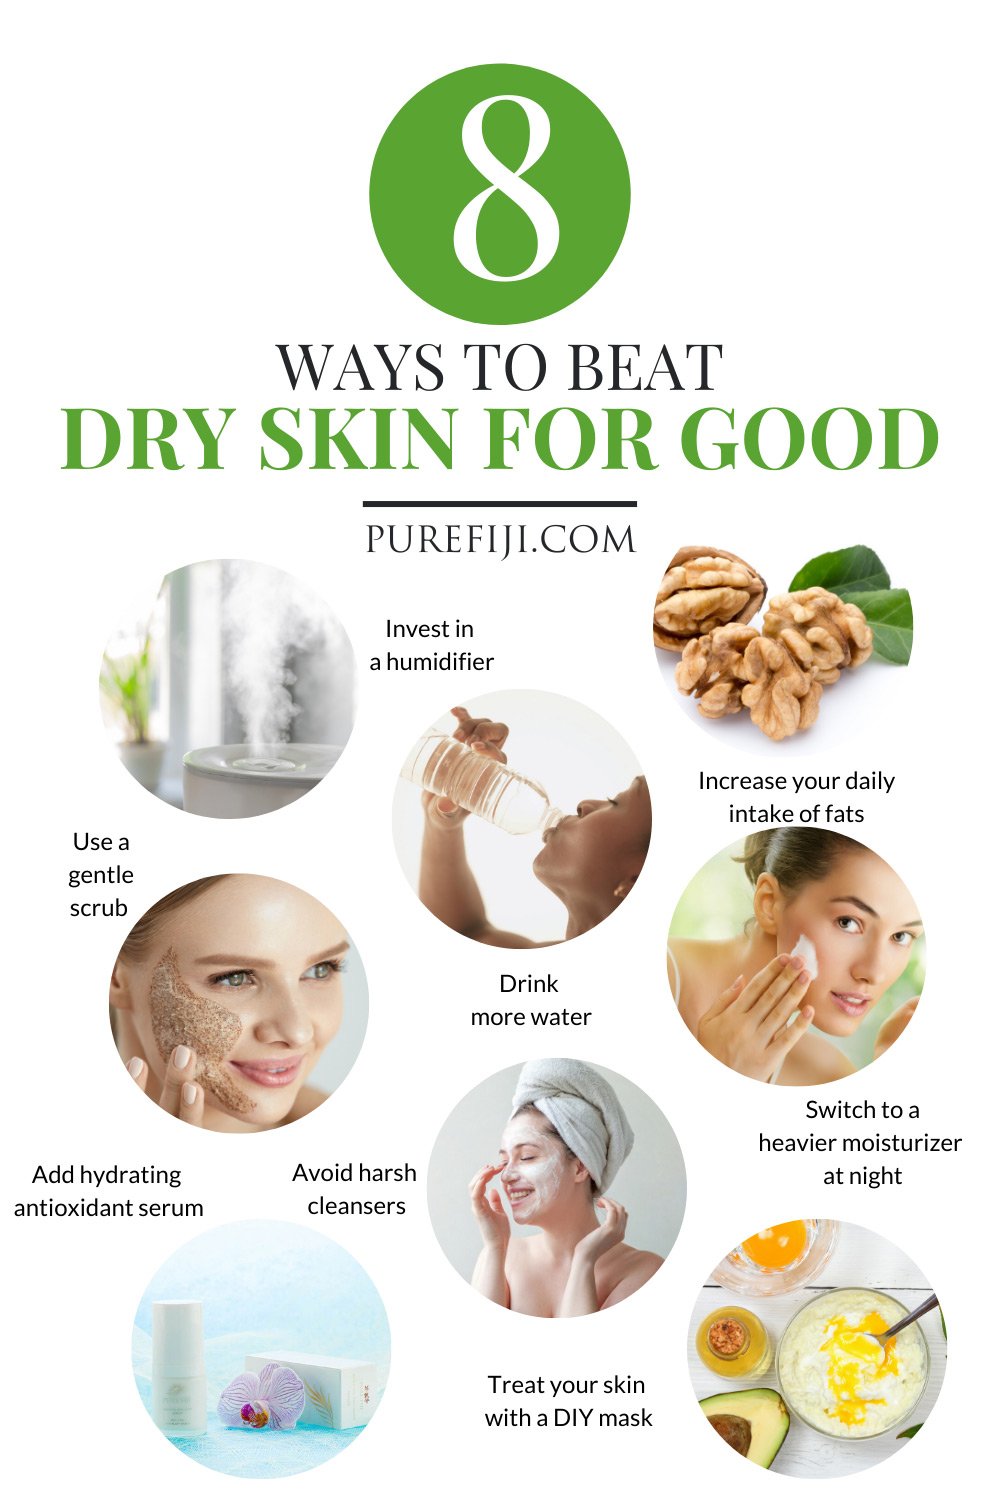 Moisturizing Skin Care Routine for Dry Skin